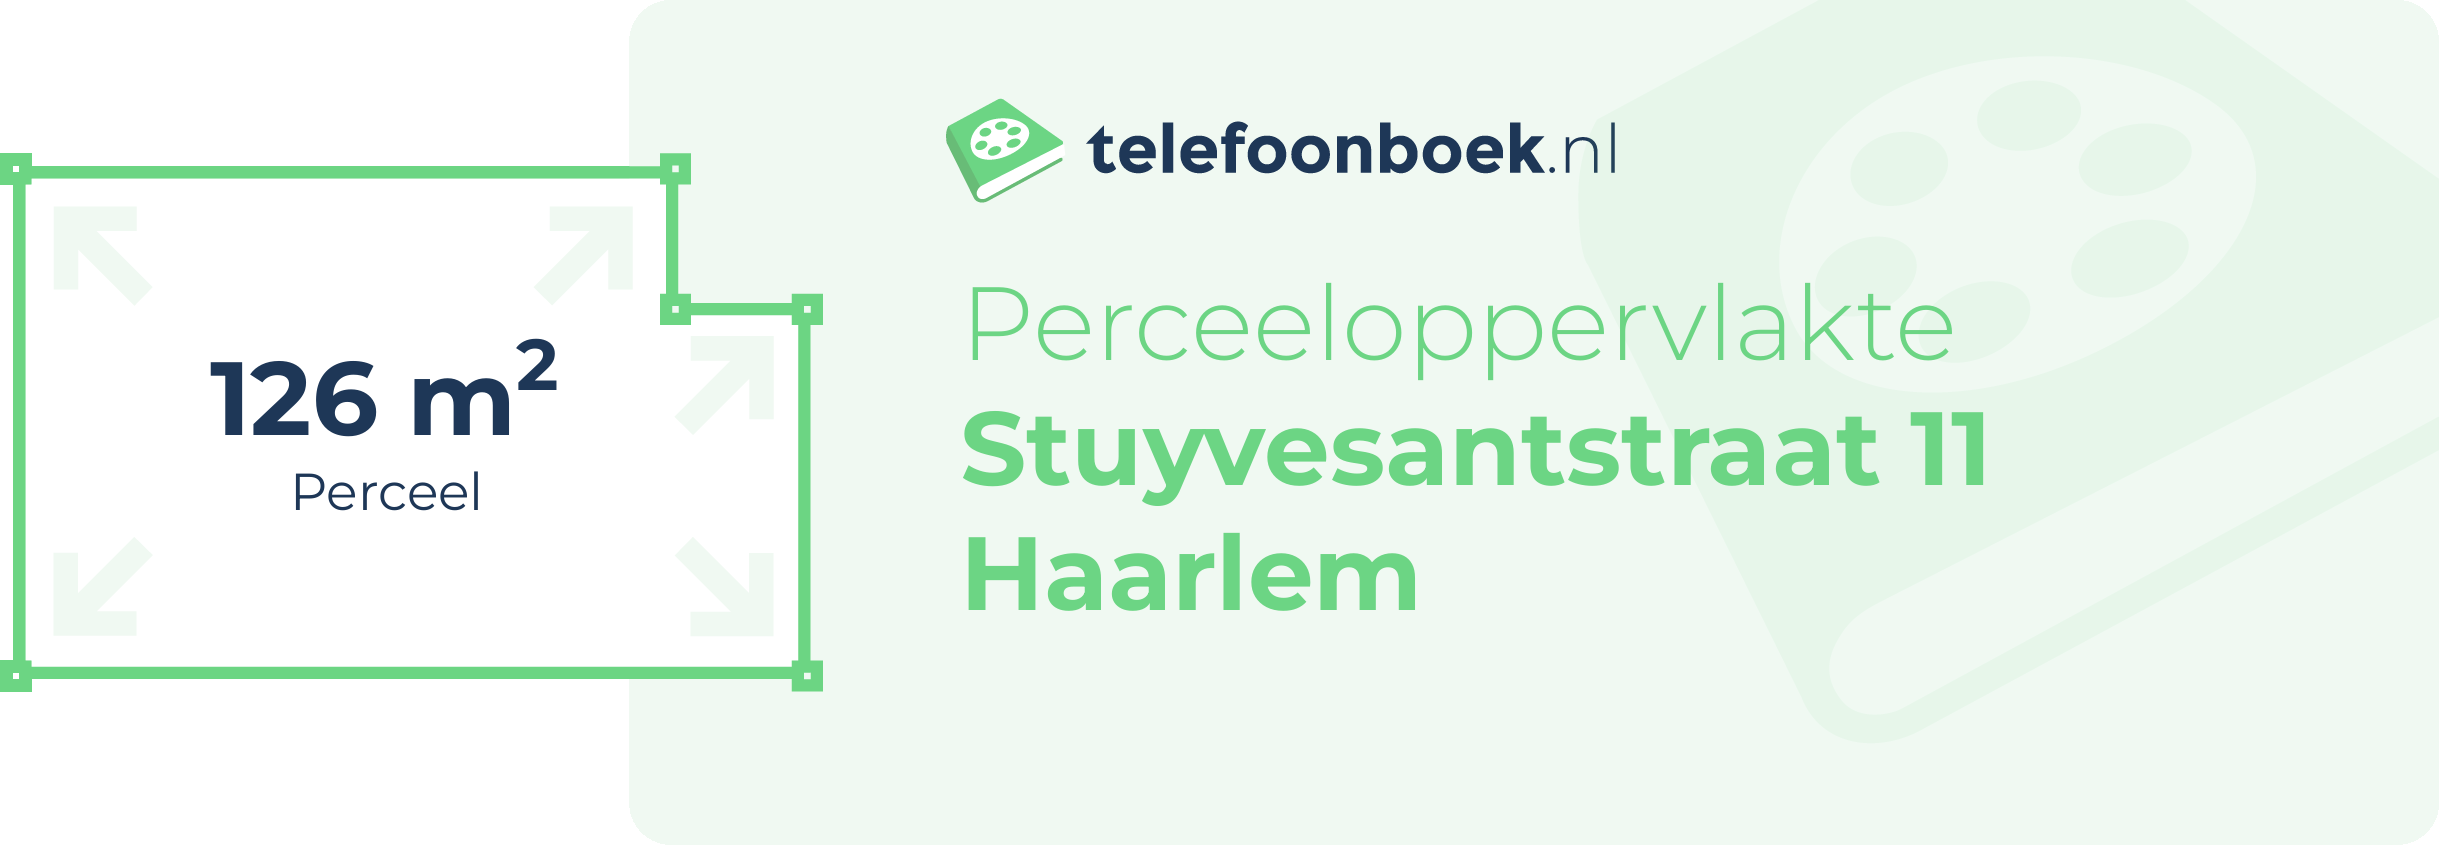 Perceeloppervlakte Stuyvesantstraat 11 Haarlem